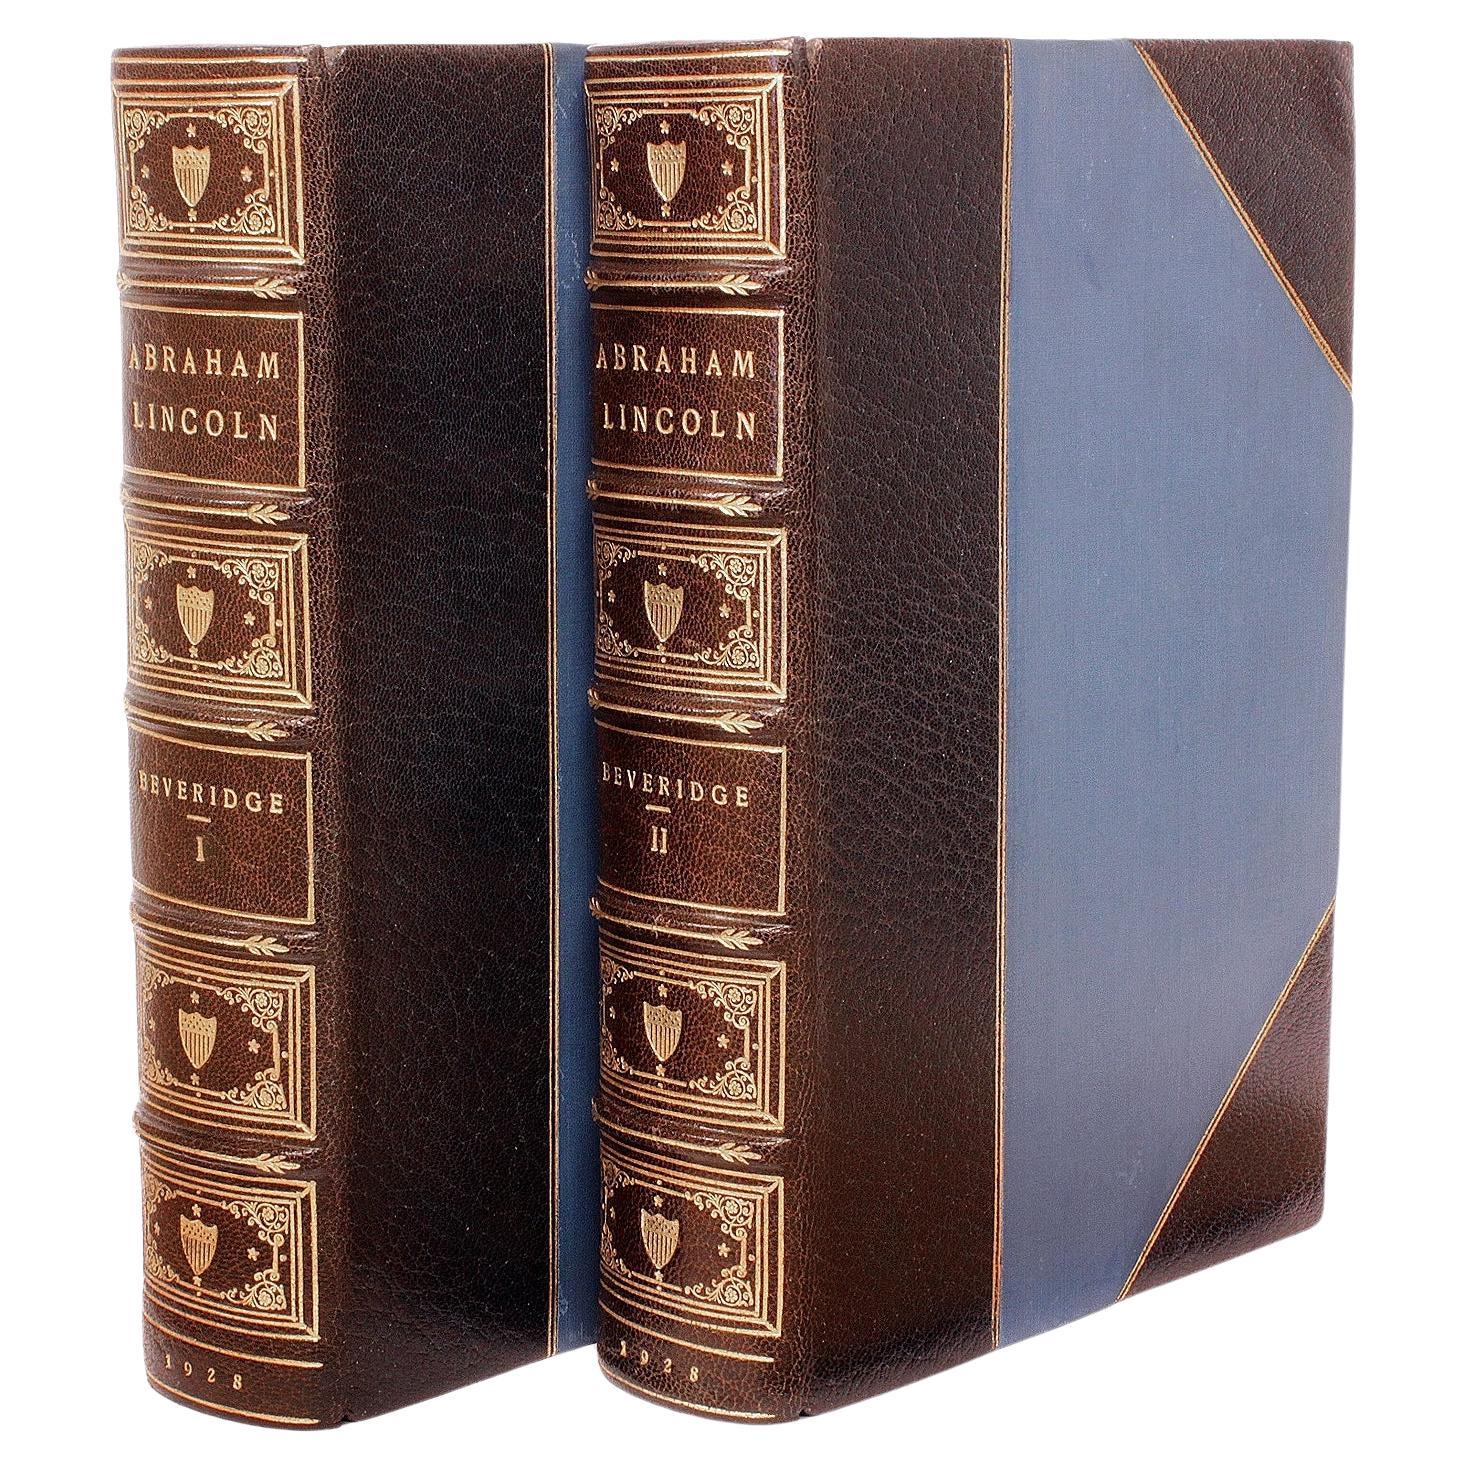 BEVERIDGE, Albert J.. Abraham Lincoln 1809-1858. 2 VOLUMES - FIRST EDITION ! For Sale